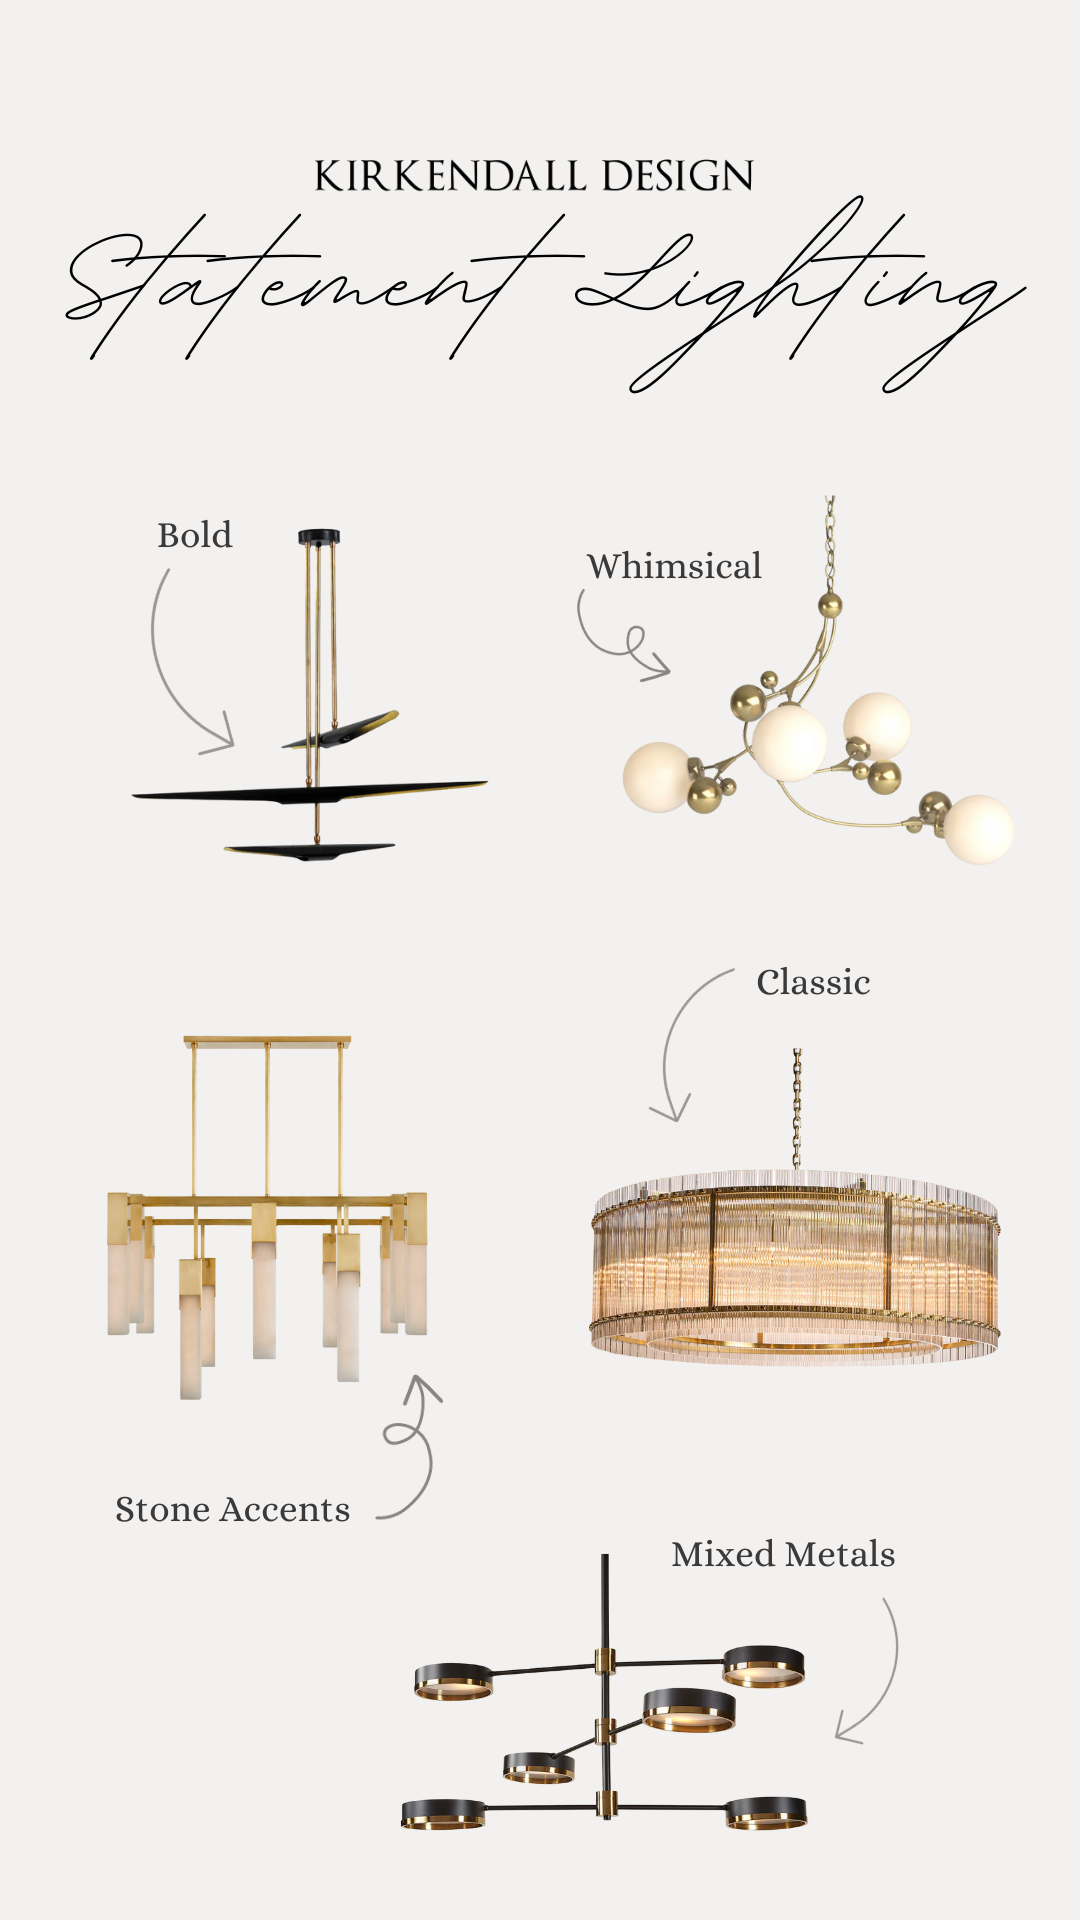 statement lighting interior design by Kirkendall Design